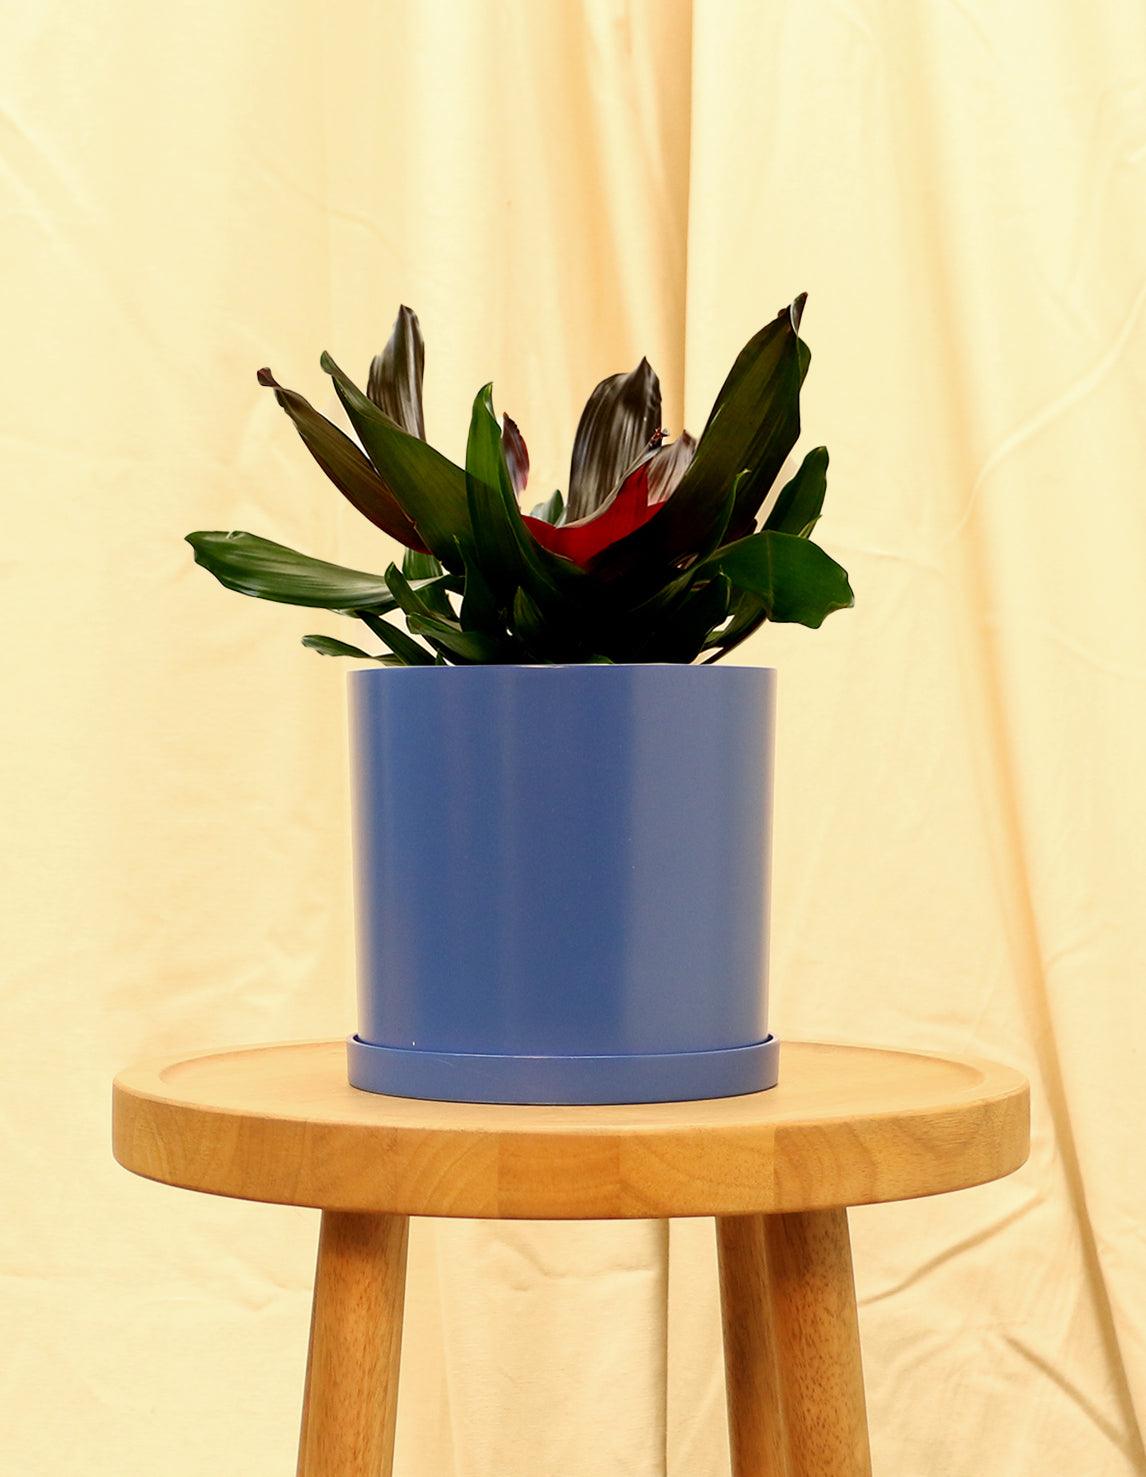 Medium Neoregelia Carolinae - Blushing Bromeliad in blue pot.